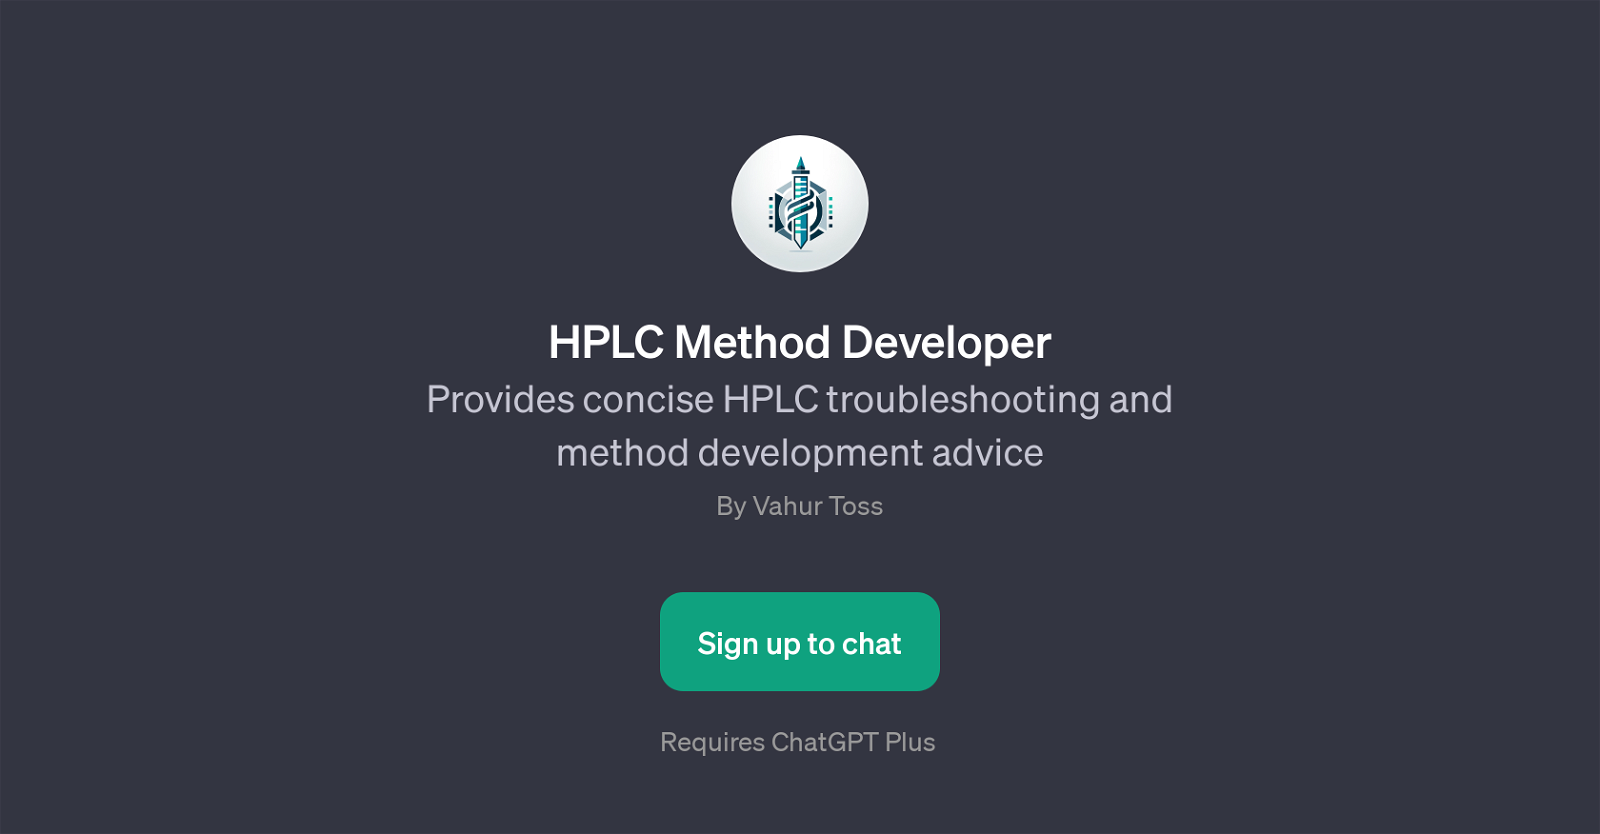 HPLC Method Developer website